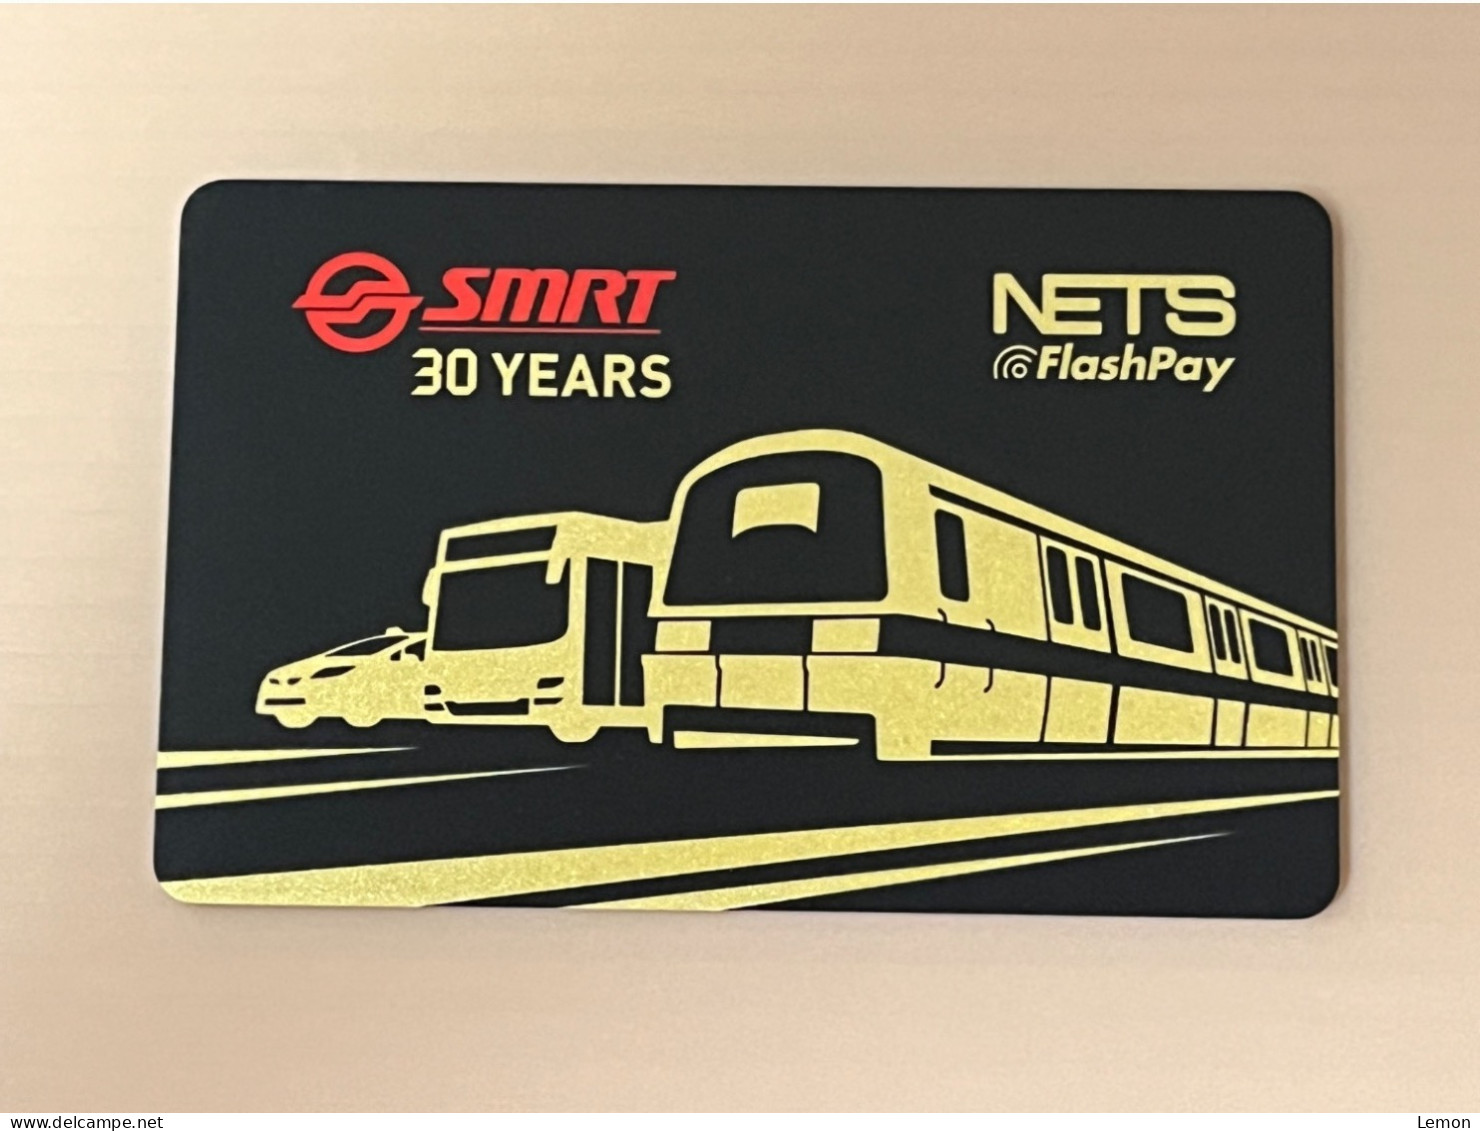 Singapore Nets Flashpay EZ Link Transport Metro Train Subway Card, SMRT 30 Years Gold, Set Of 1 Used Card - Singapore